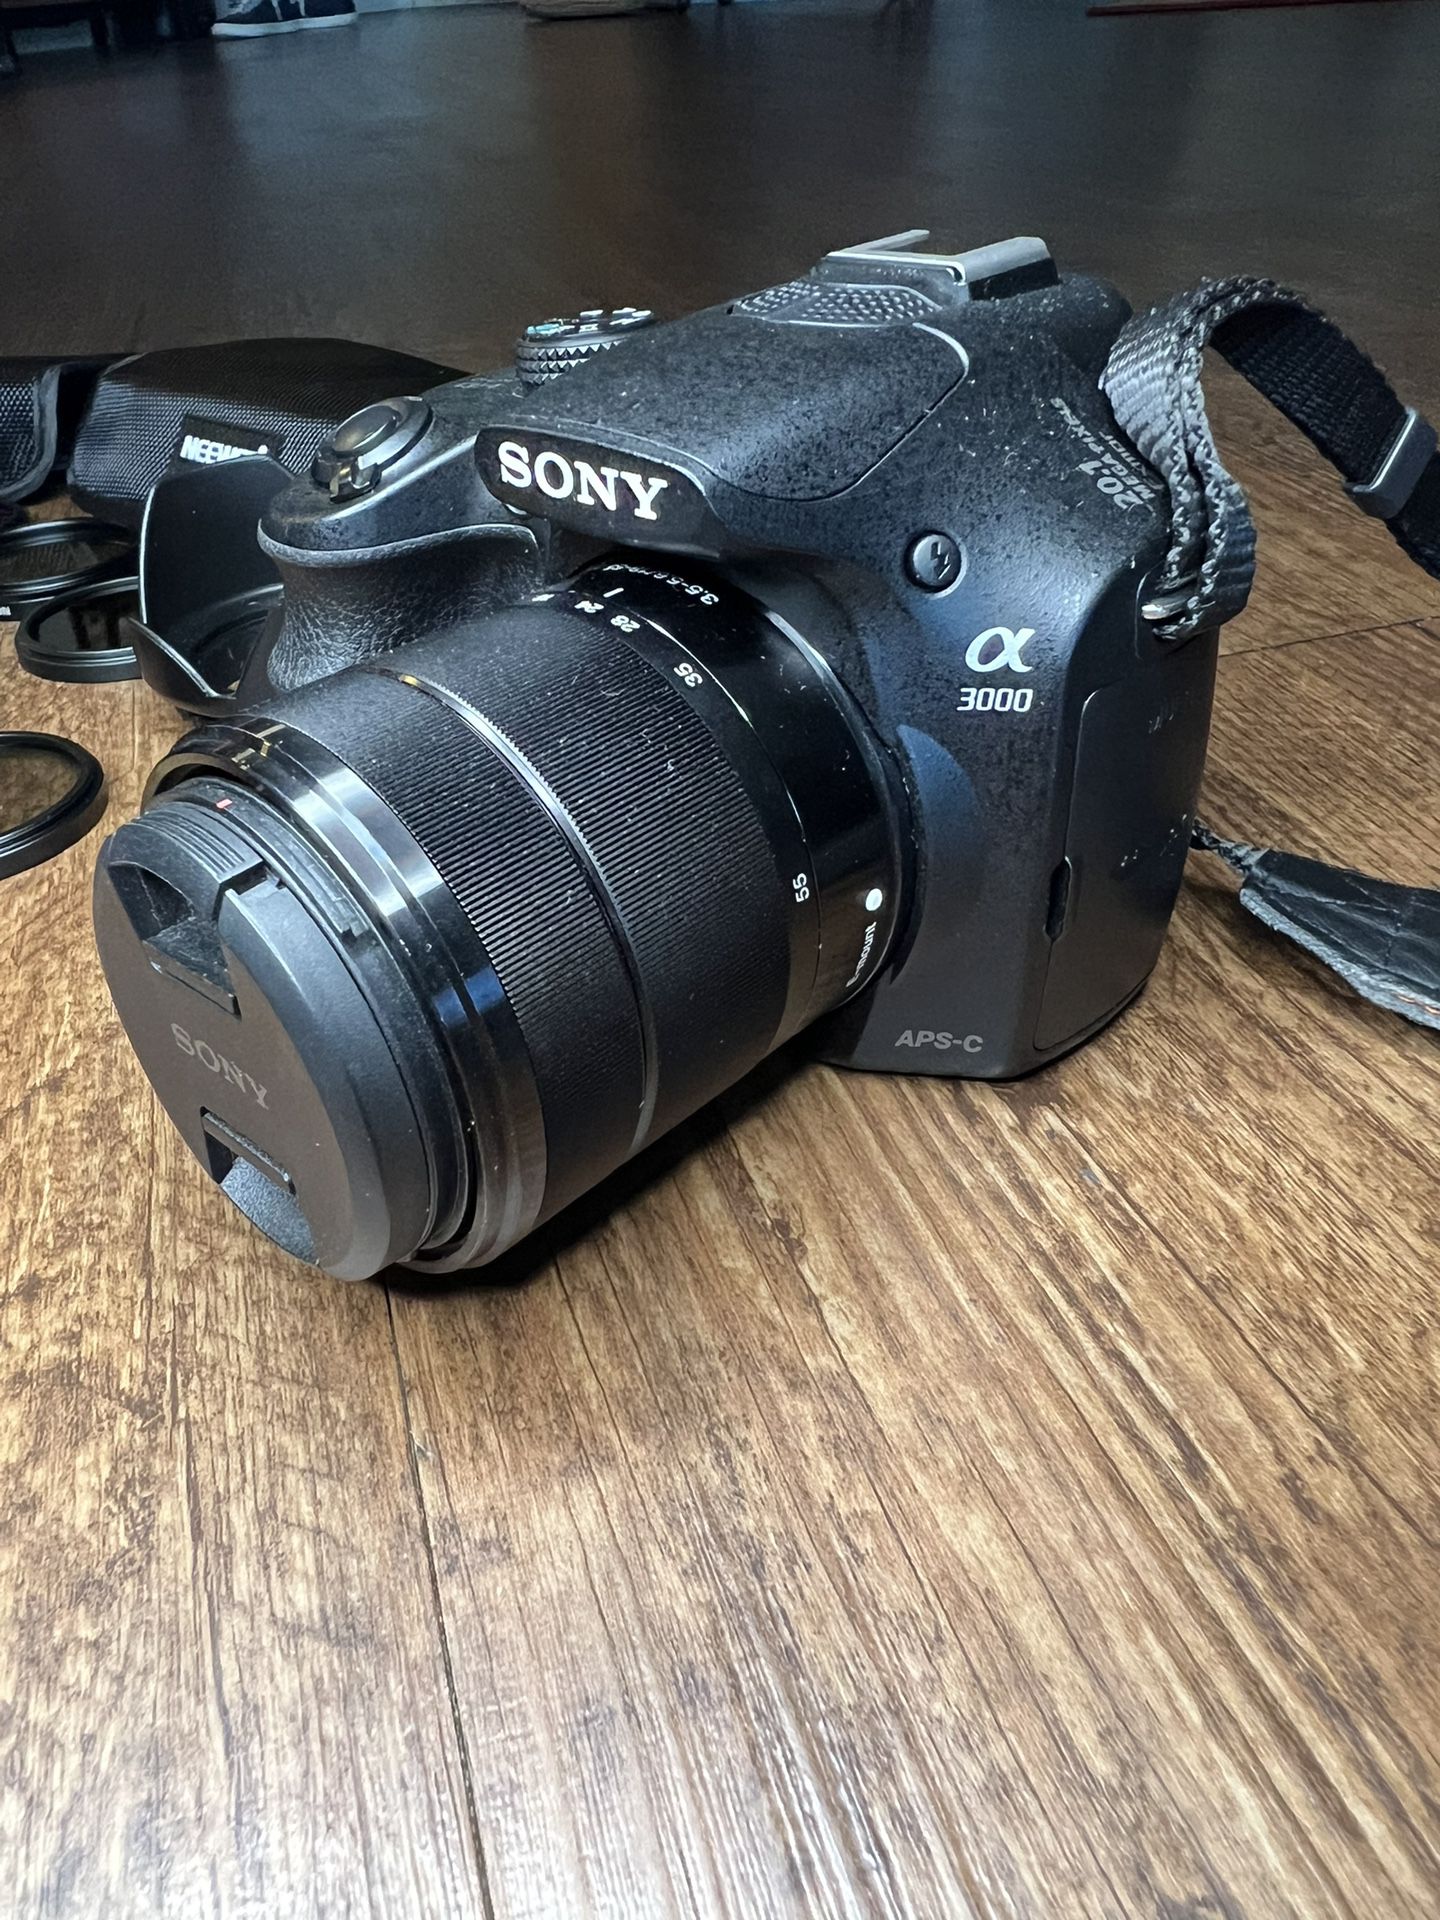 Sony Alpha a3000 ILCE-3000K 20.1 MP Mirrorless Digital Camera - Black - 18-55mm OSS Lens